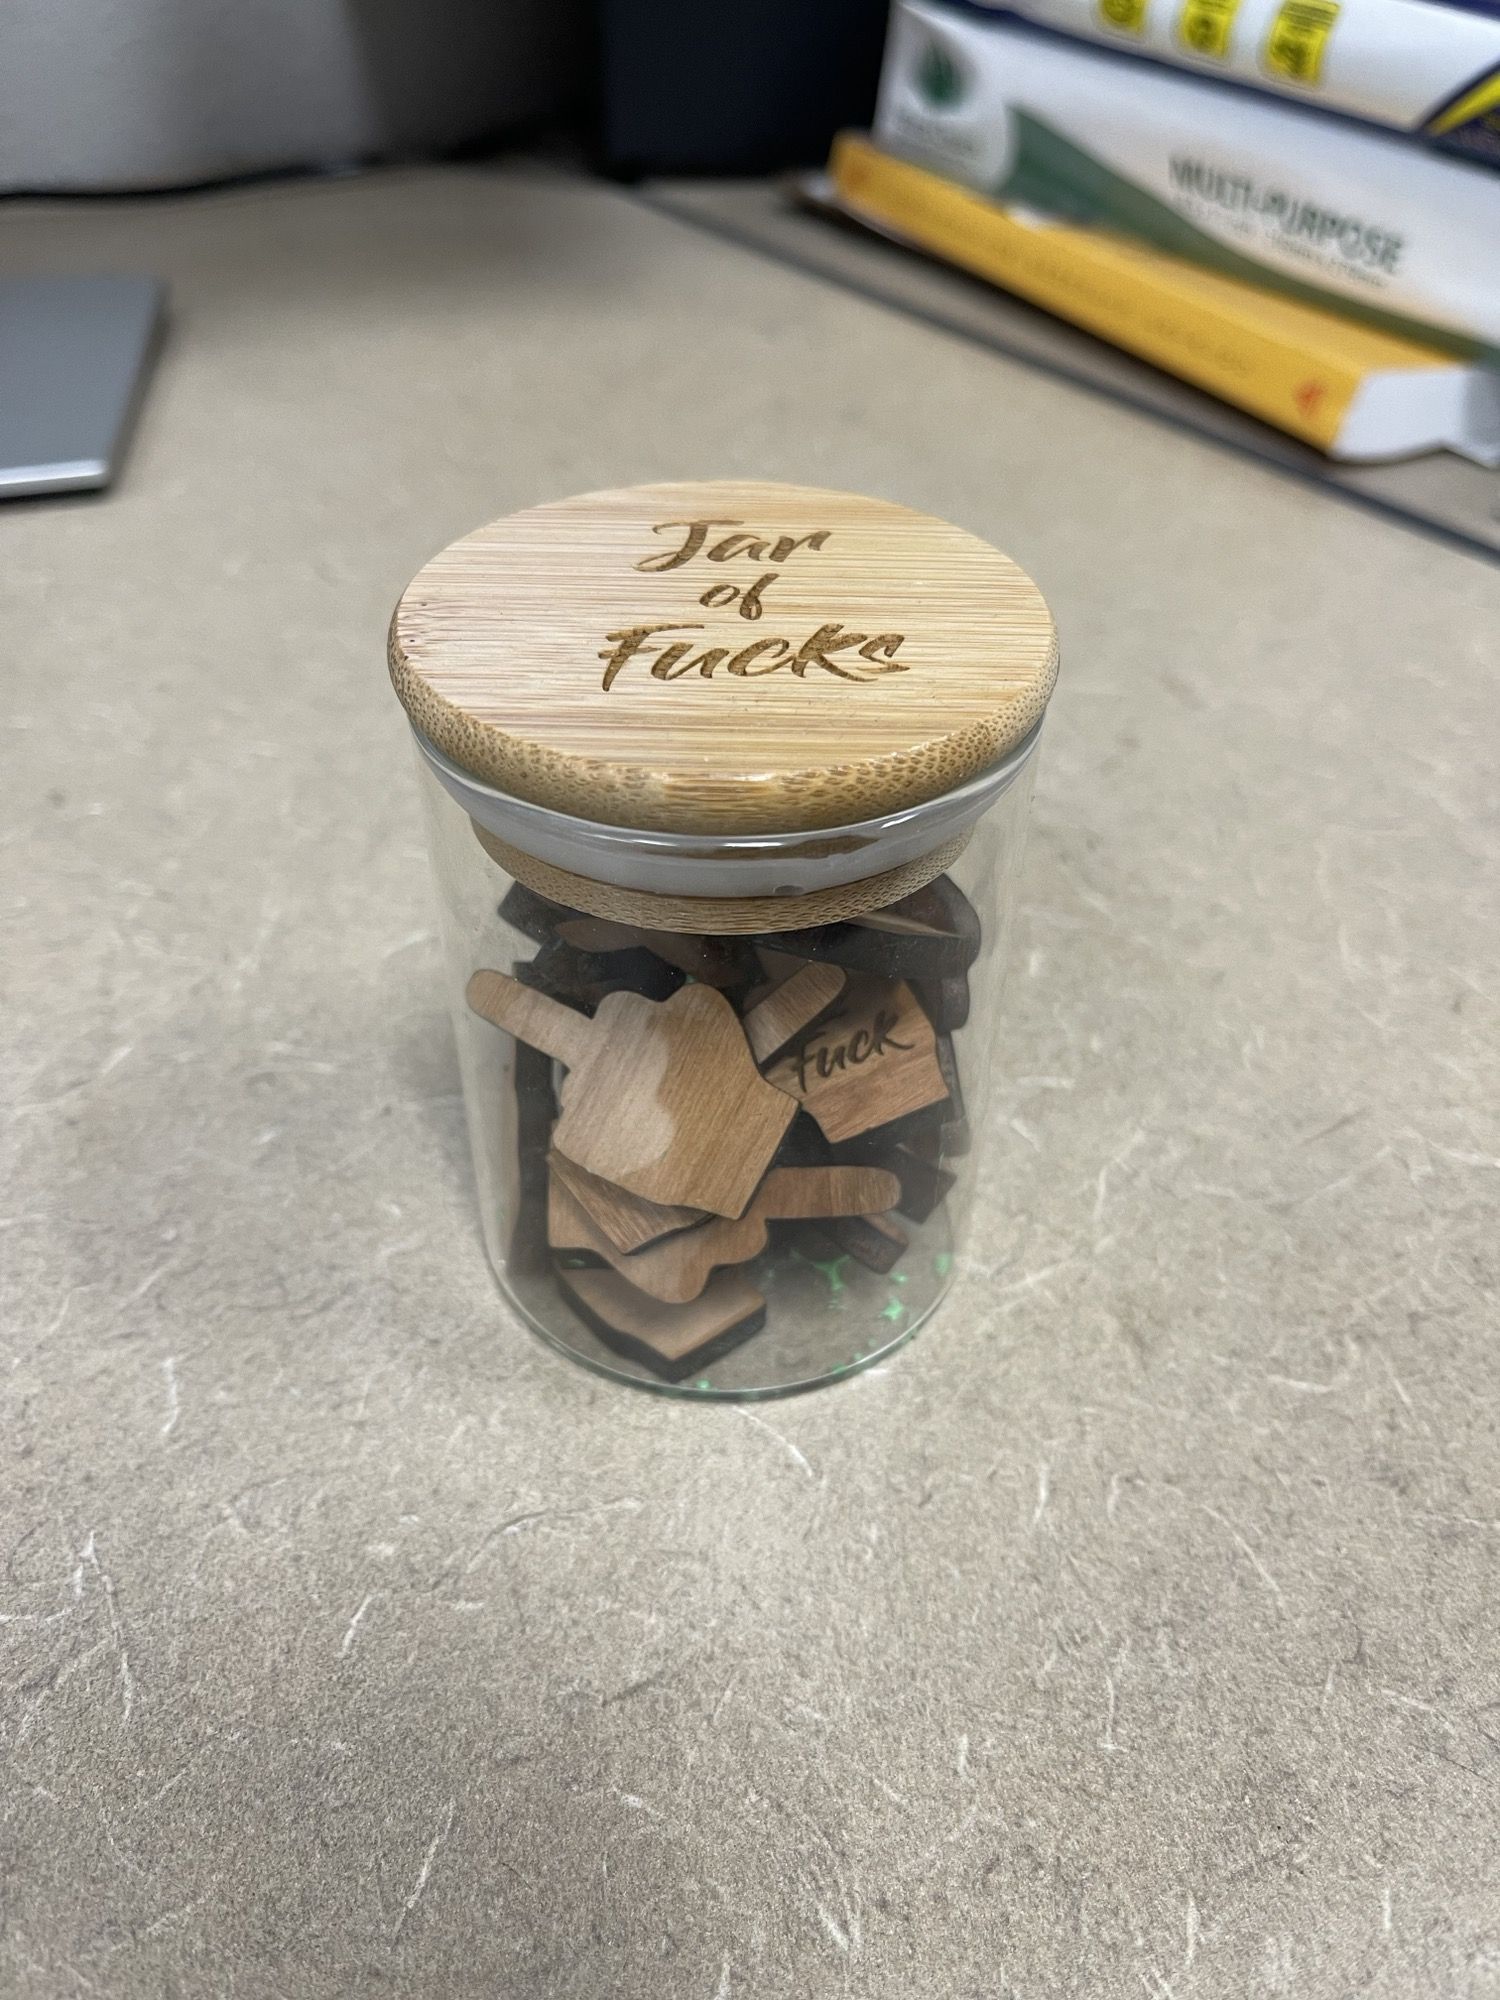 My co-worker’s Jar of ***s.